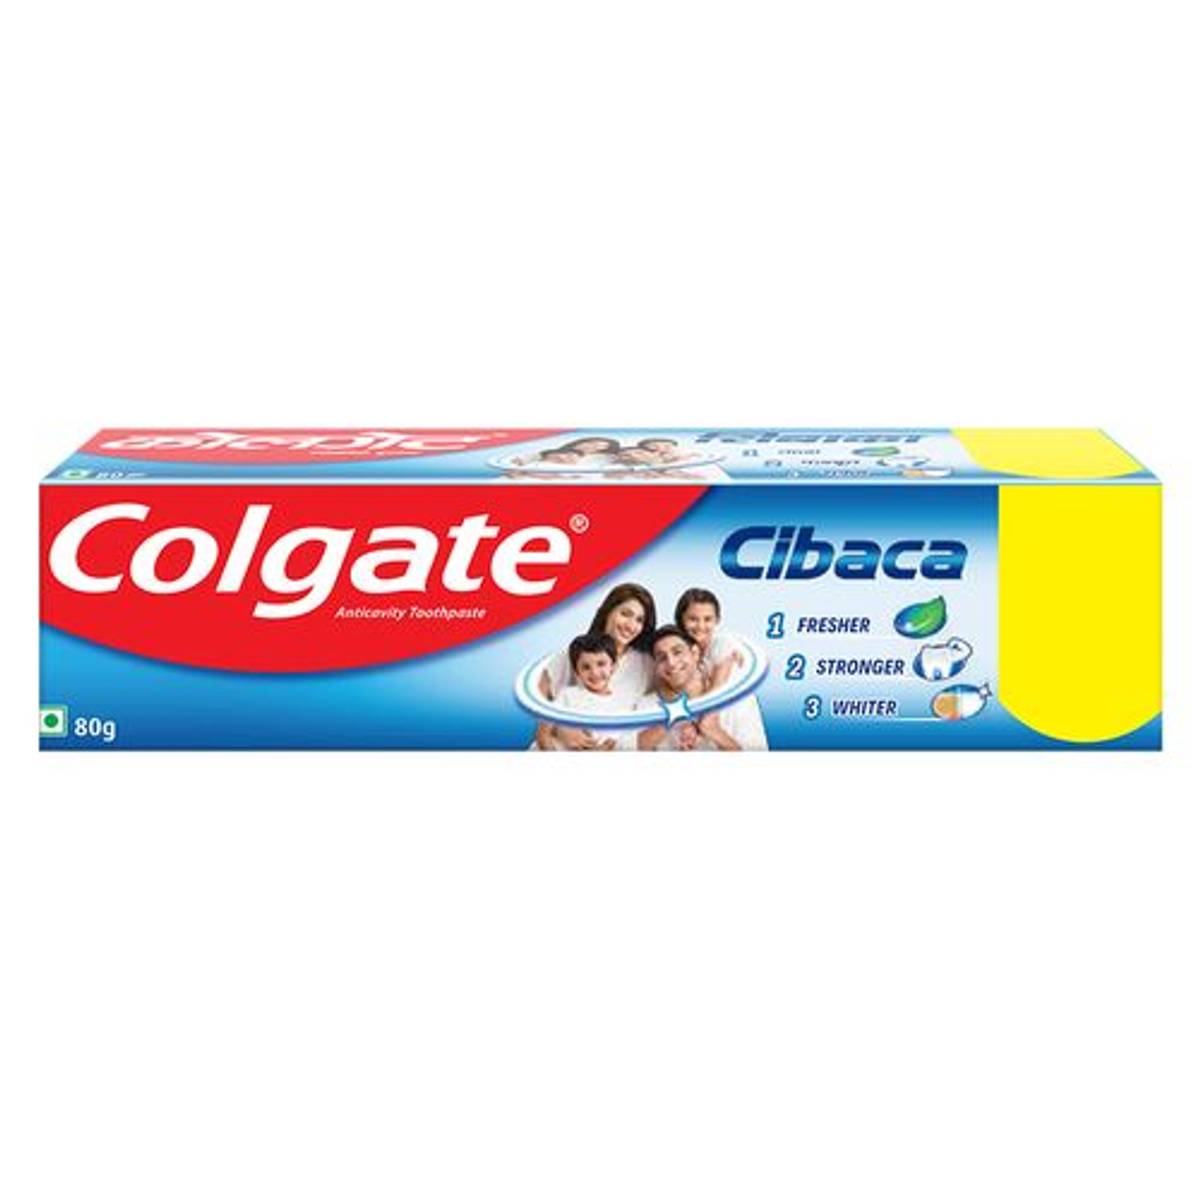 Colgate Cibaca Tooth Paste 65g